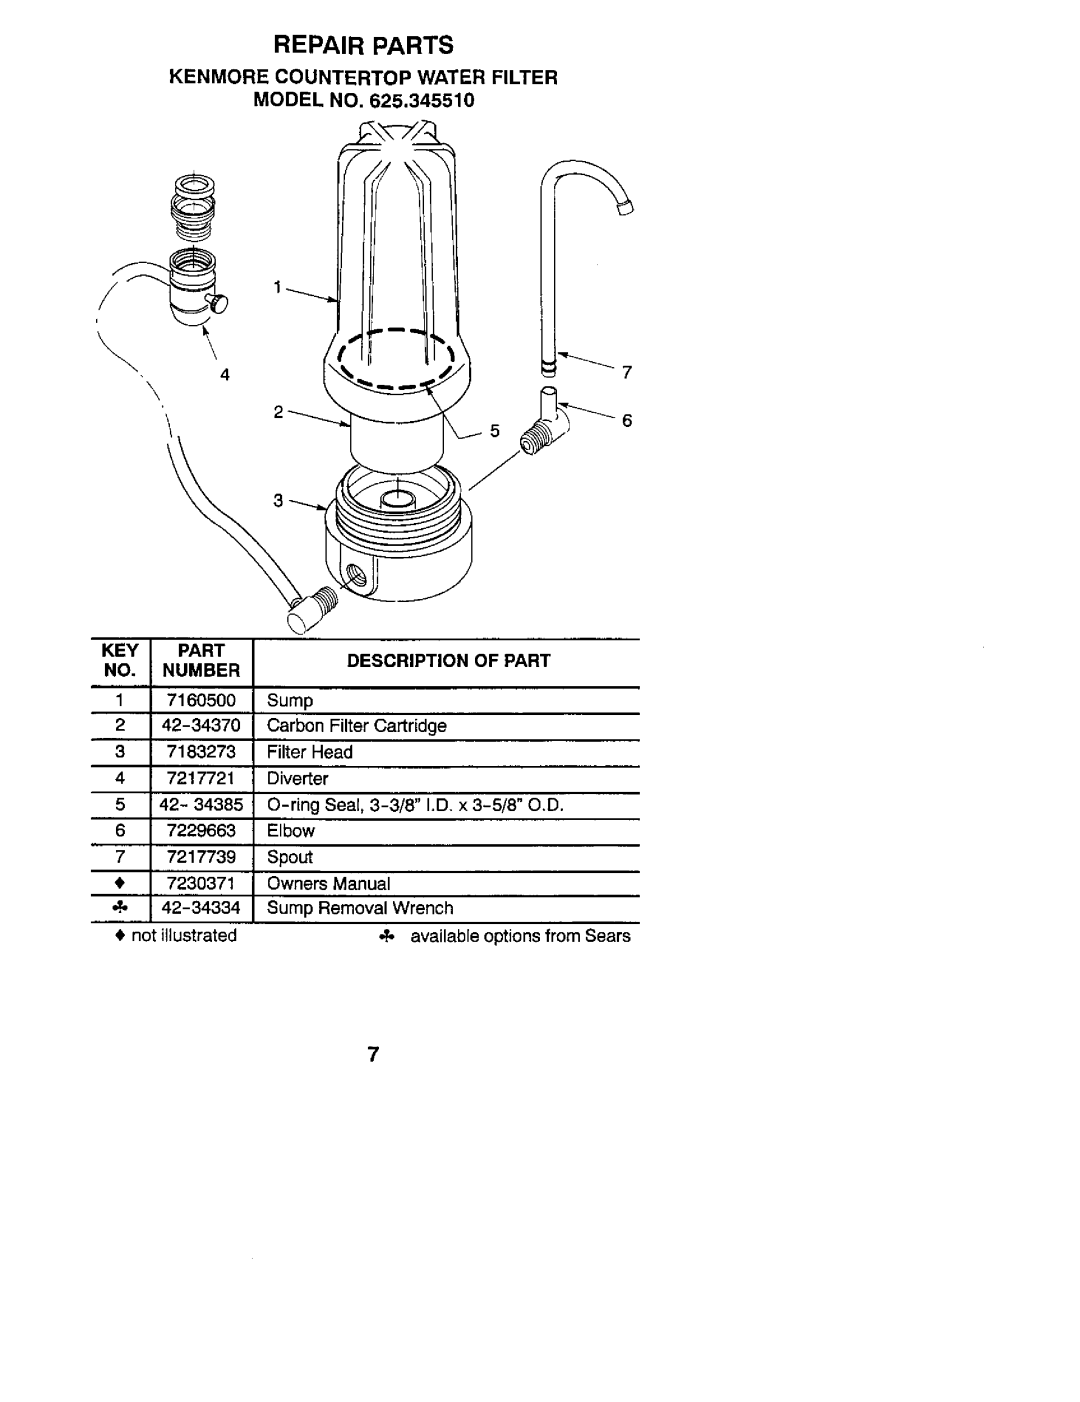 Kenmore 625.34551 Repair Parts, Kenmore Countertop Water Filter Model No, Key Part Description Of Part No. Number, 1 == 